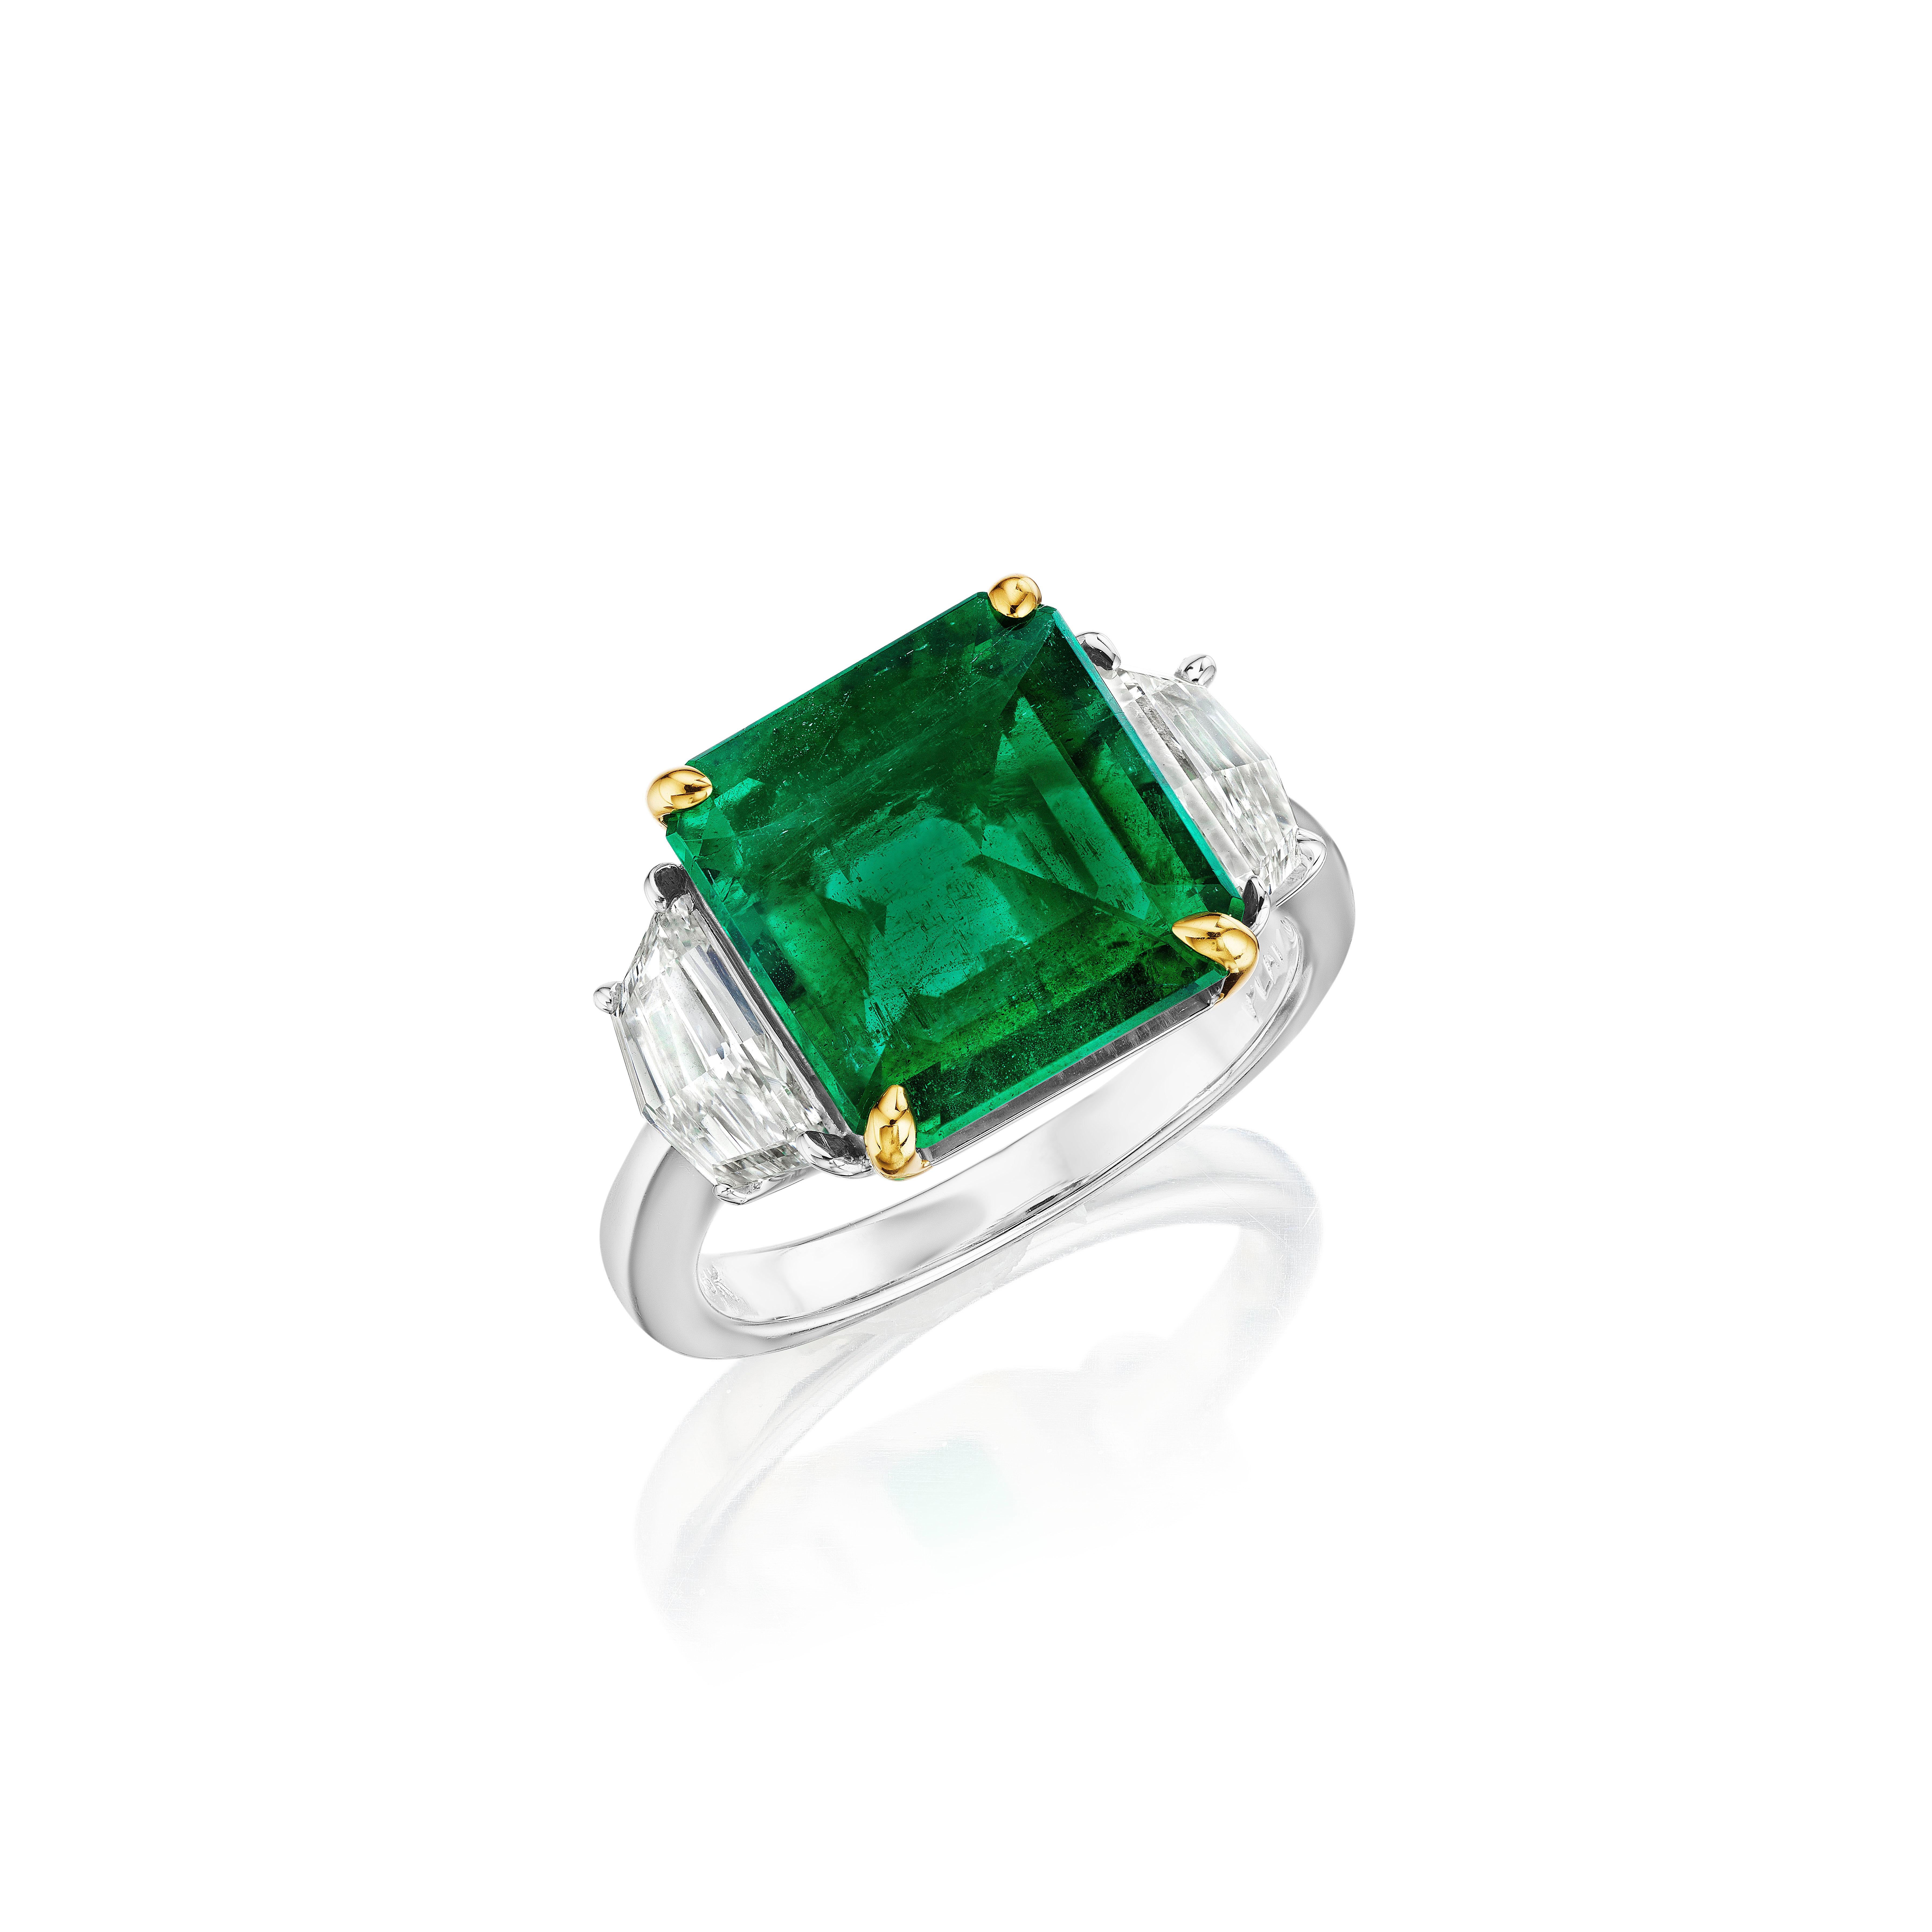 •	Platinum & 18KT Two Tone
•	5.91 Carats
•	Size 6.5

•	Number of Emeralds: 1
•	Carat Weight: 4.75ctw
•	Color: Vivid green- Natural Beryl
•	Certificate: CDC1706550
•	Moderate Clarity Enhancement

•	Number of Cadillac Diamonds: 2
•	Carat Weight: